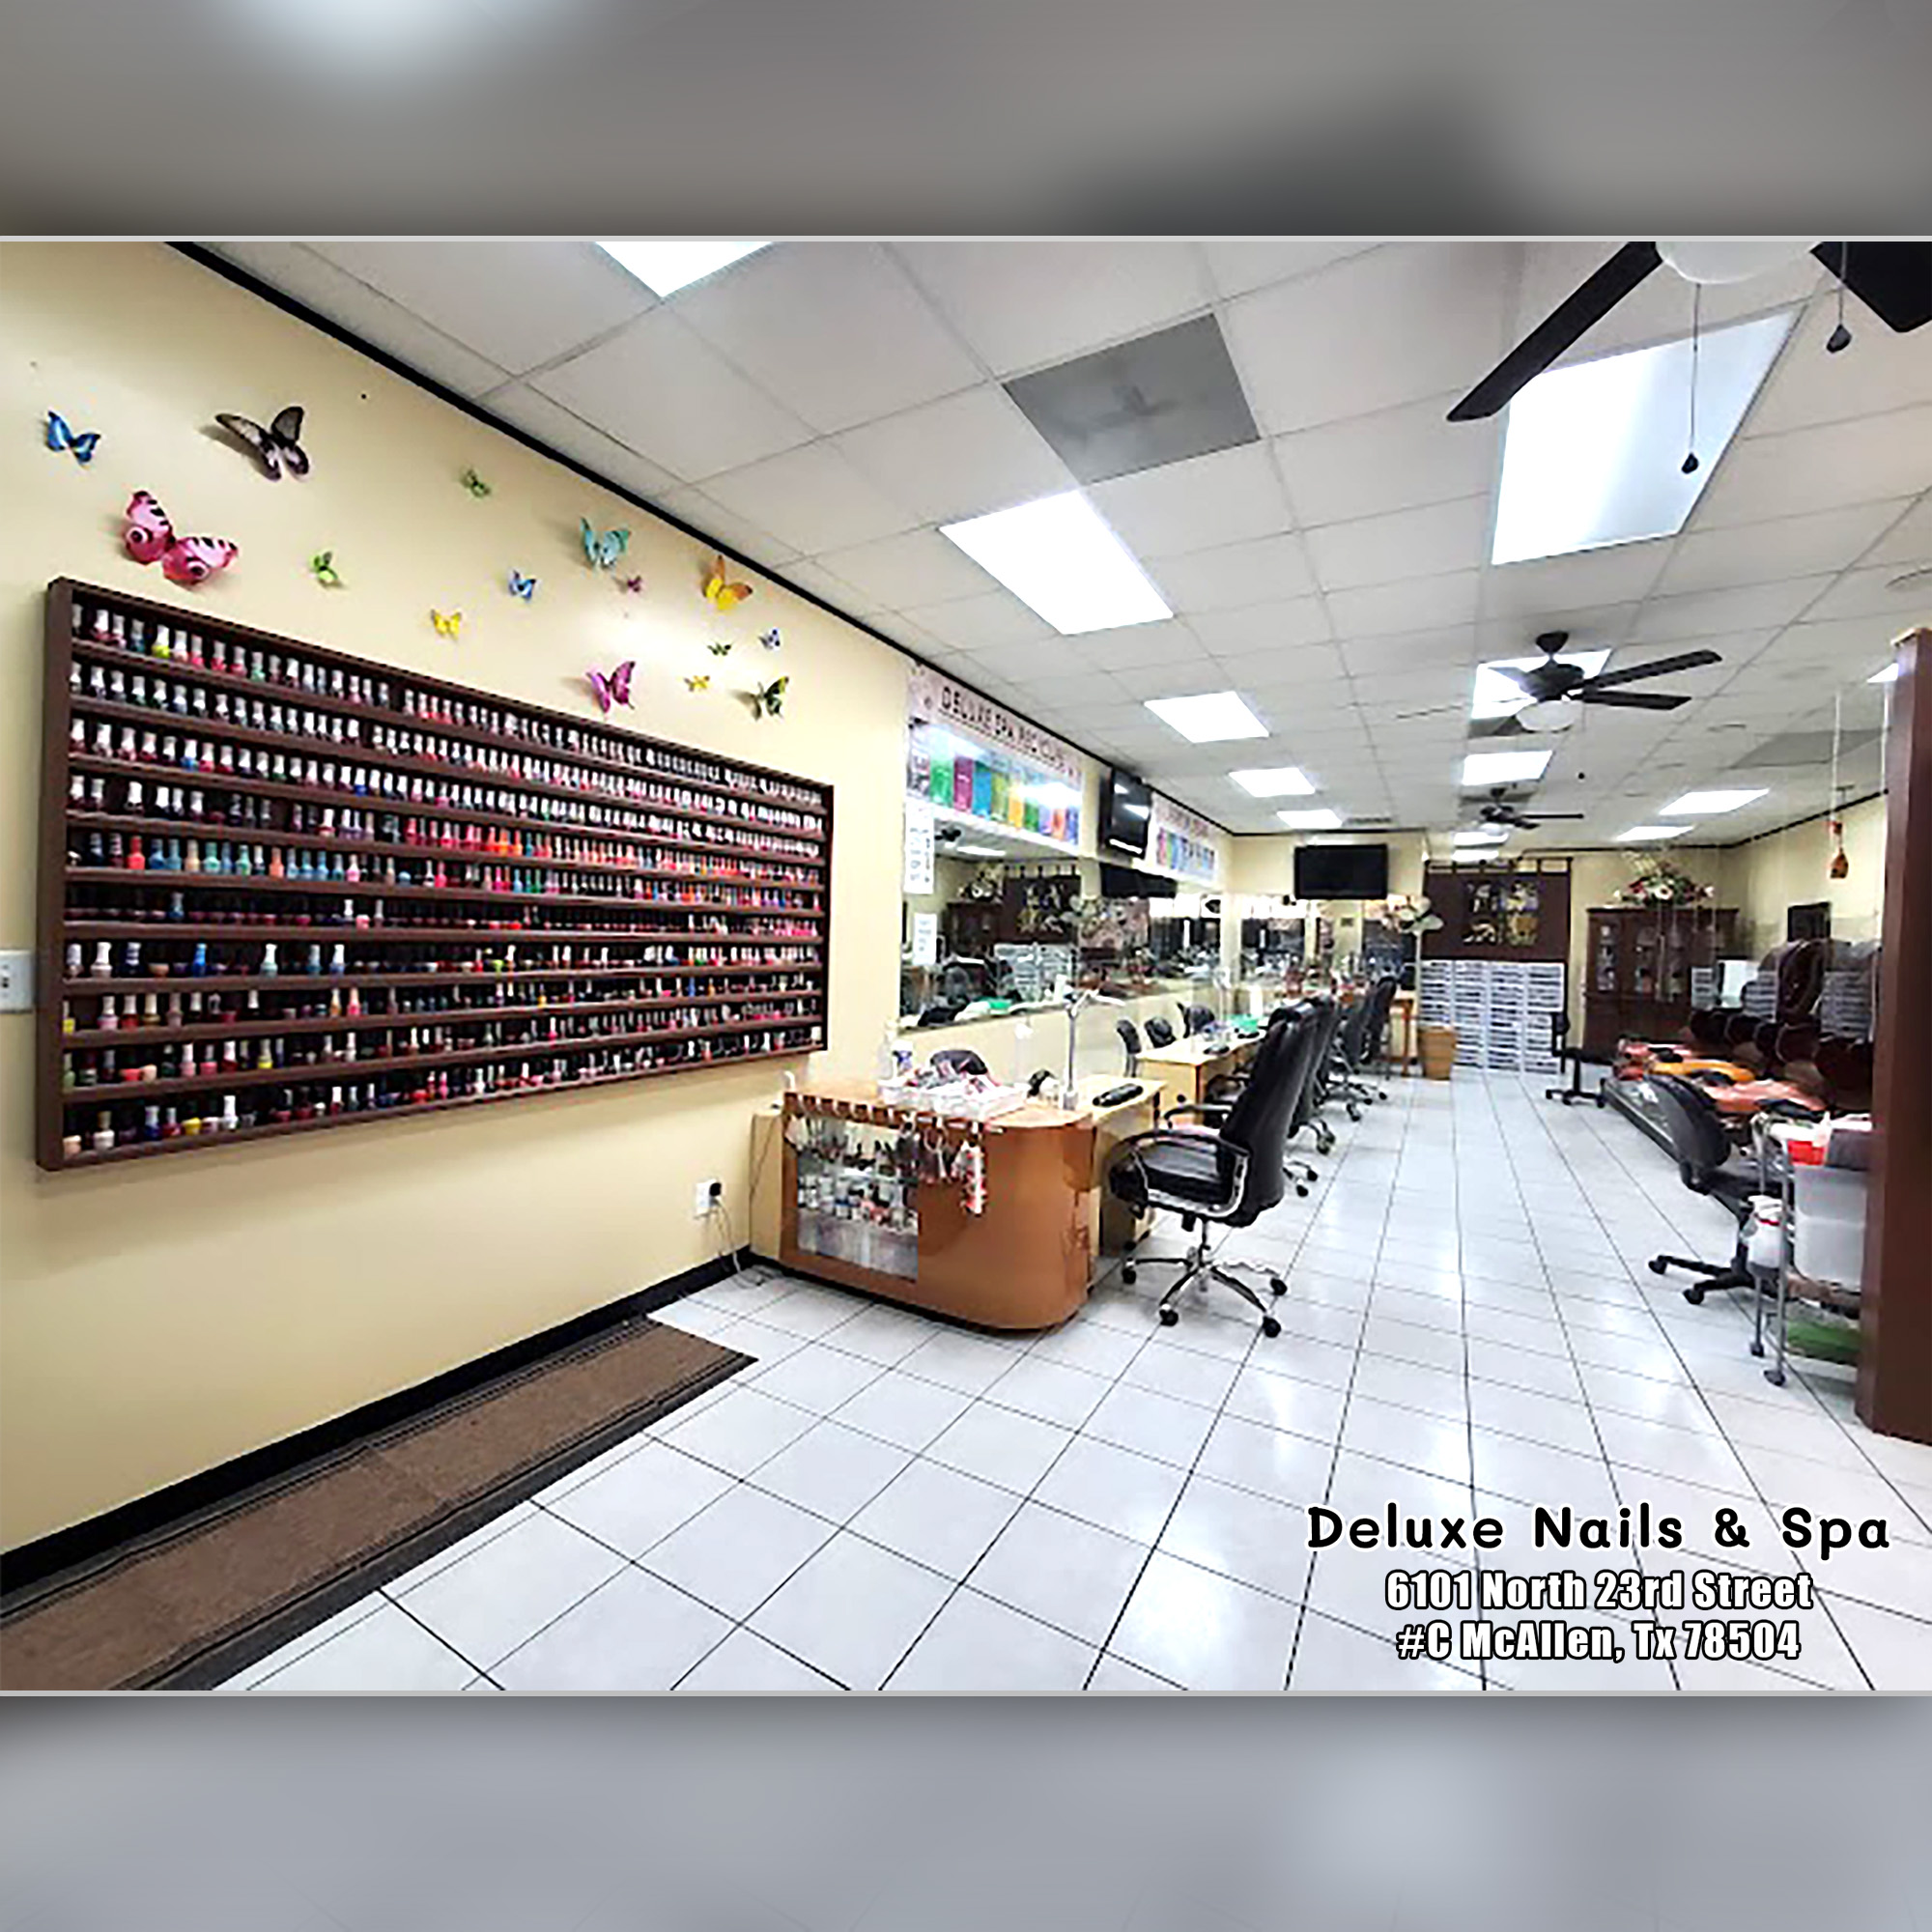 Deluxe Nails & Spa | Nice Salon in McAllen, Tx 78504